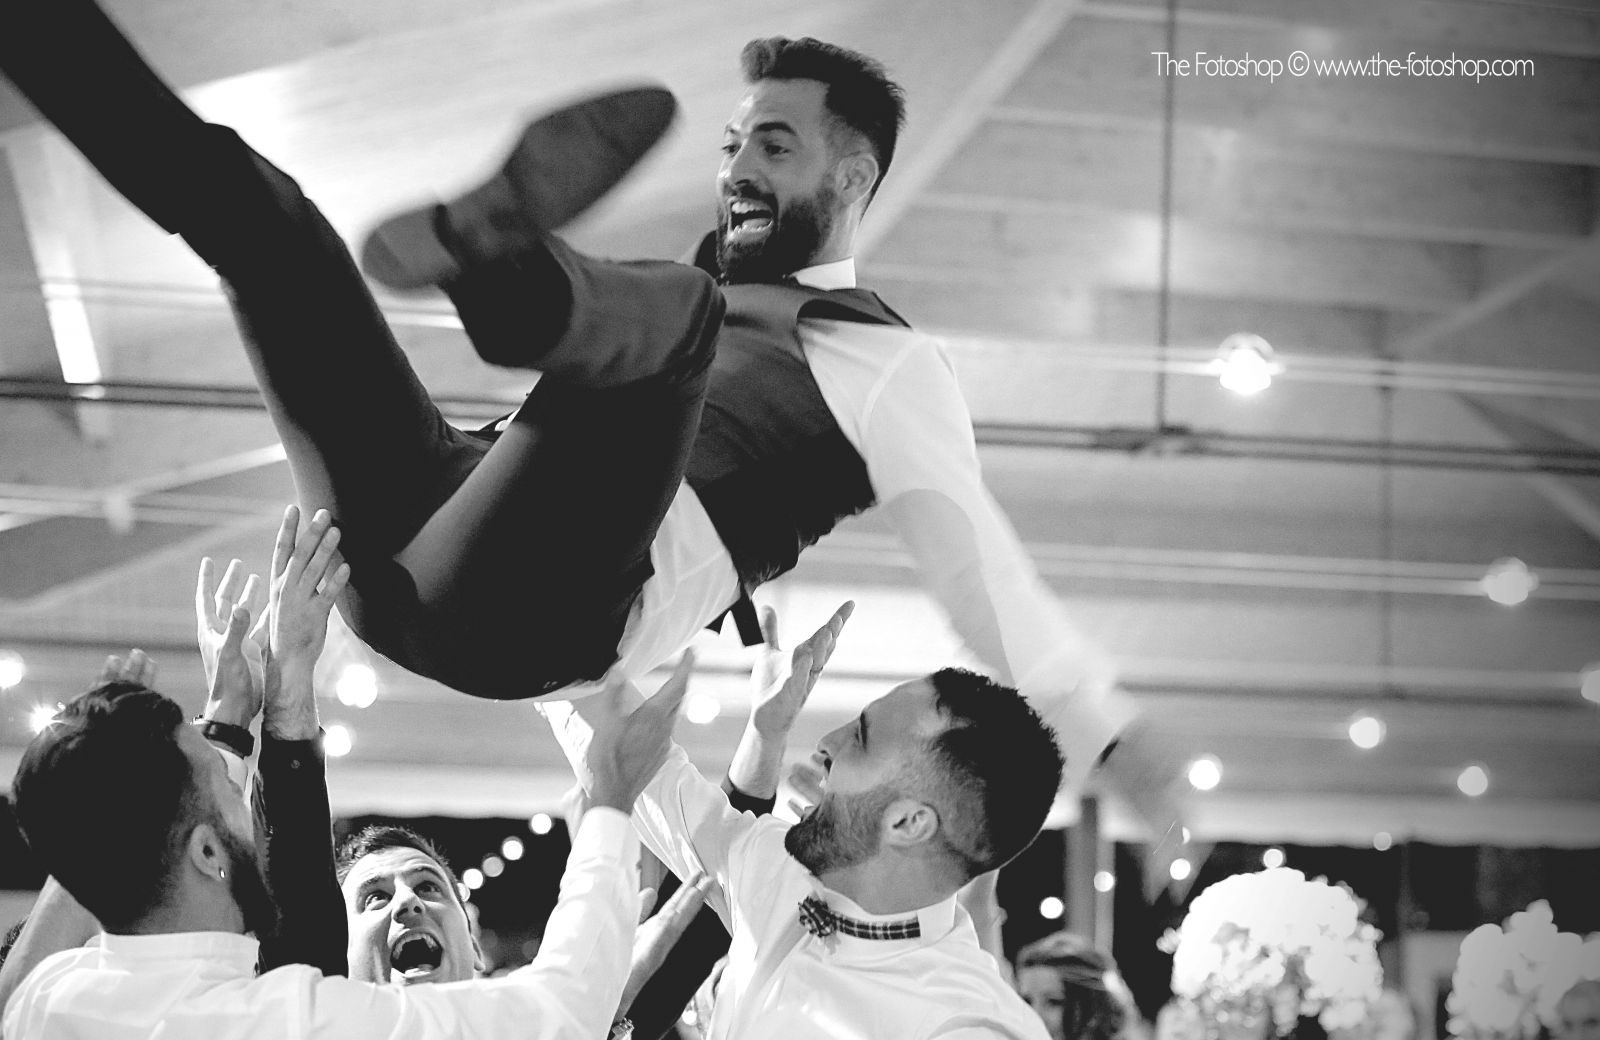 Fotografía de boda, fiesta, baile de novios